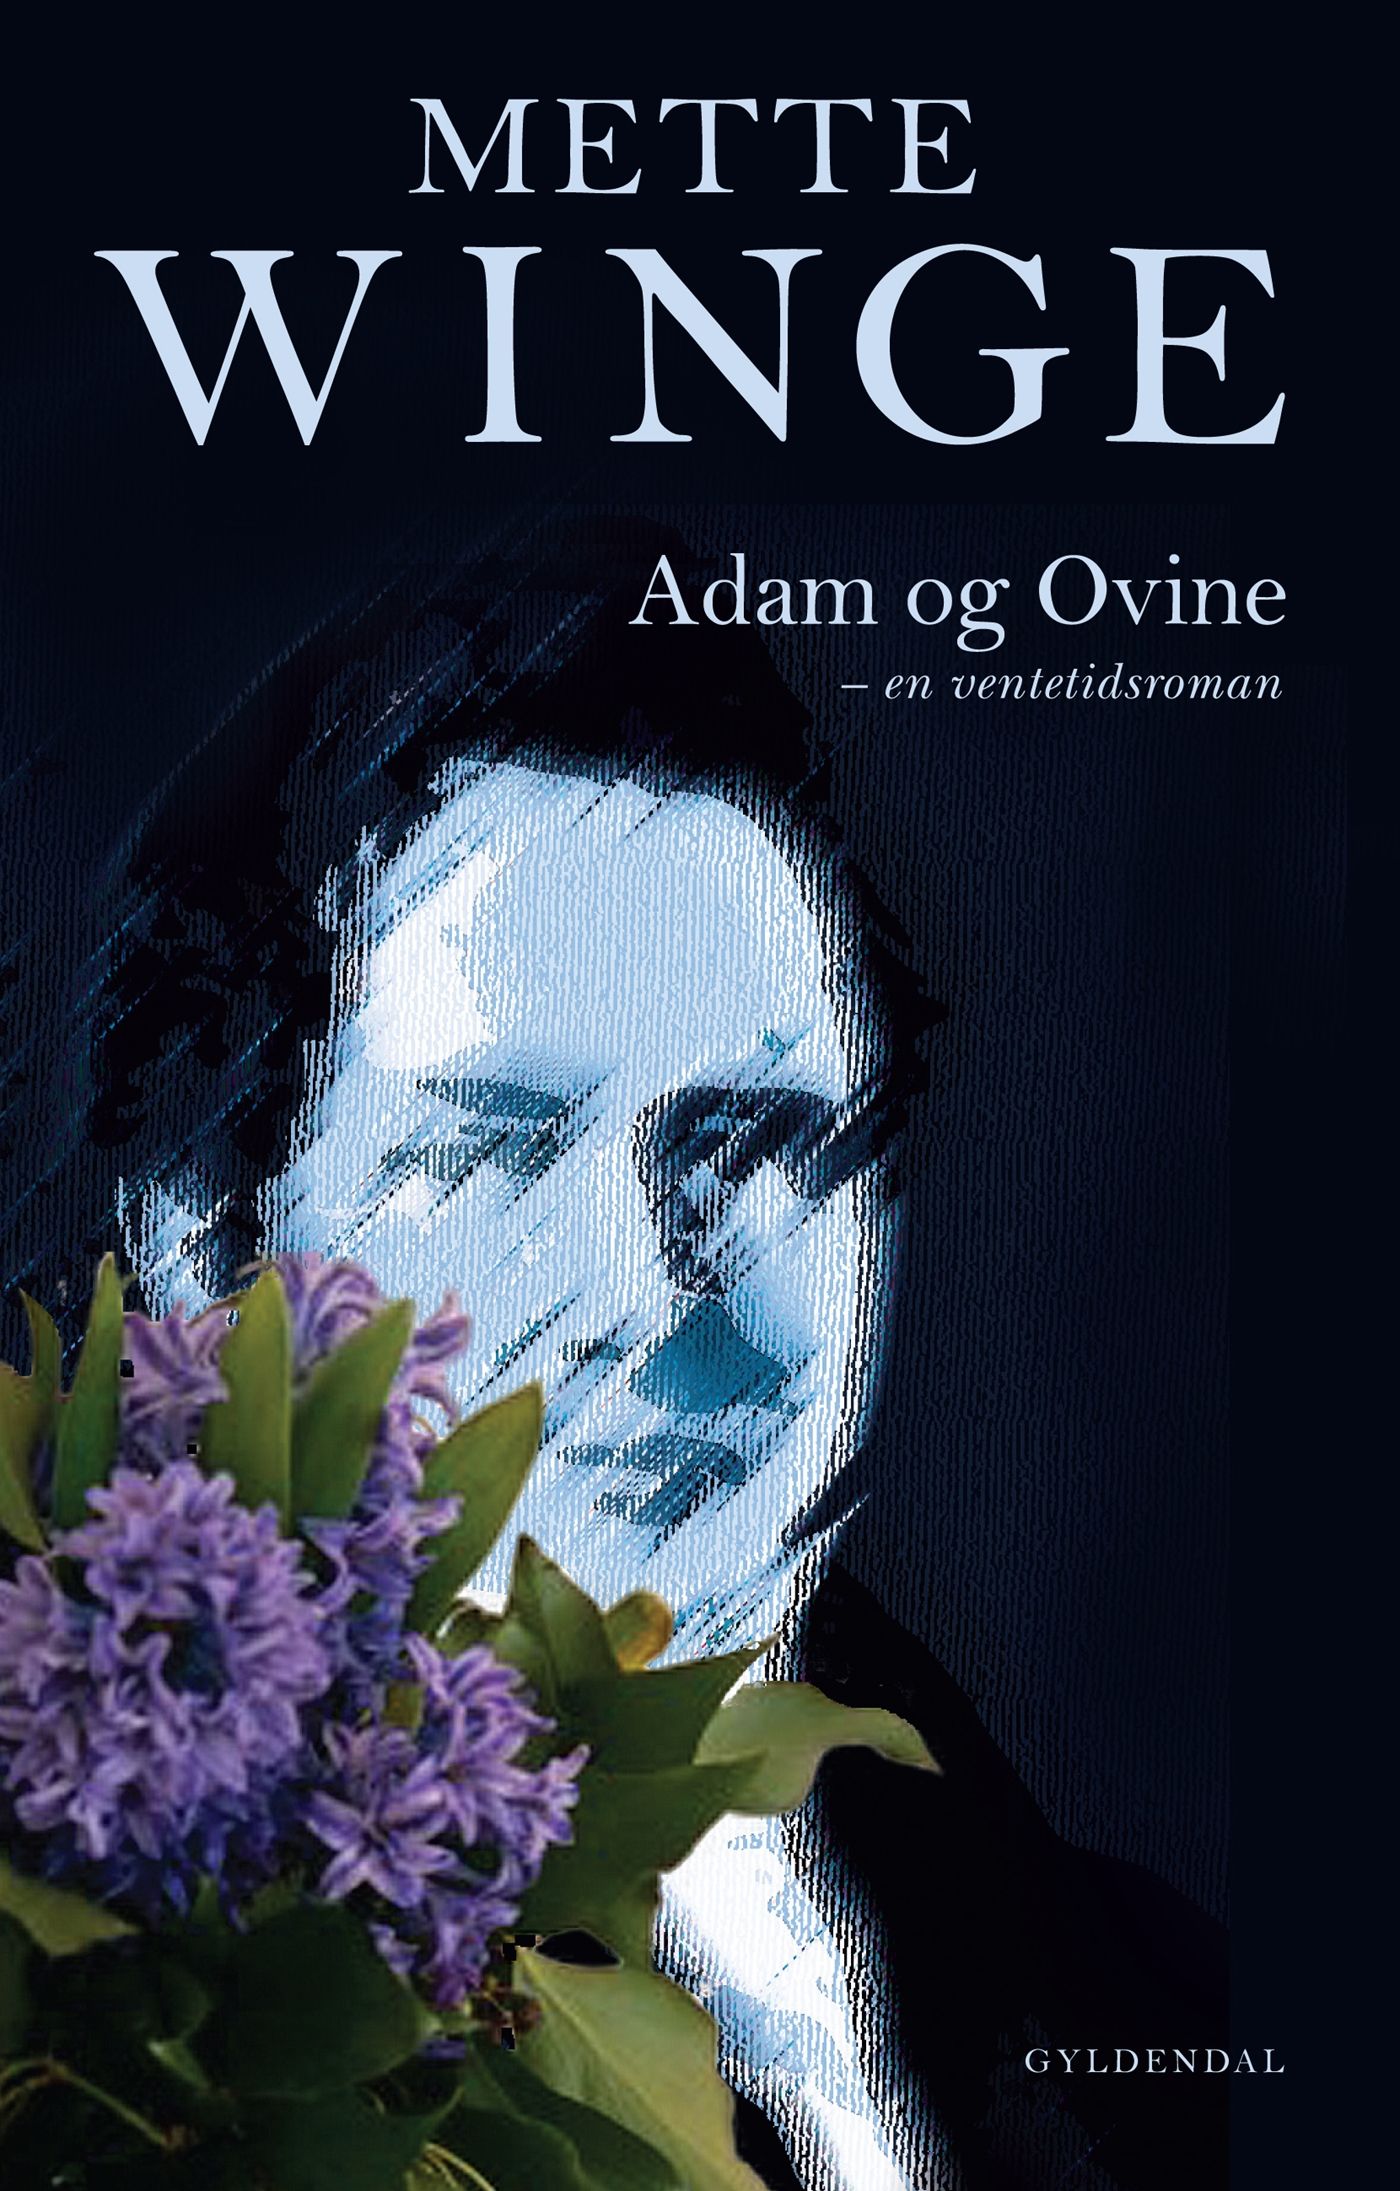 Adam og Ovine, eBook by Mette Winge